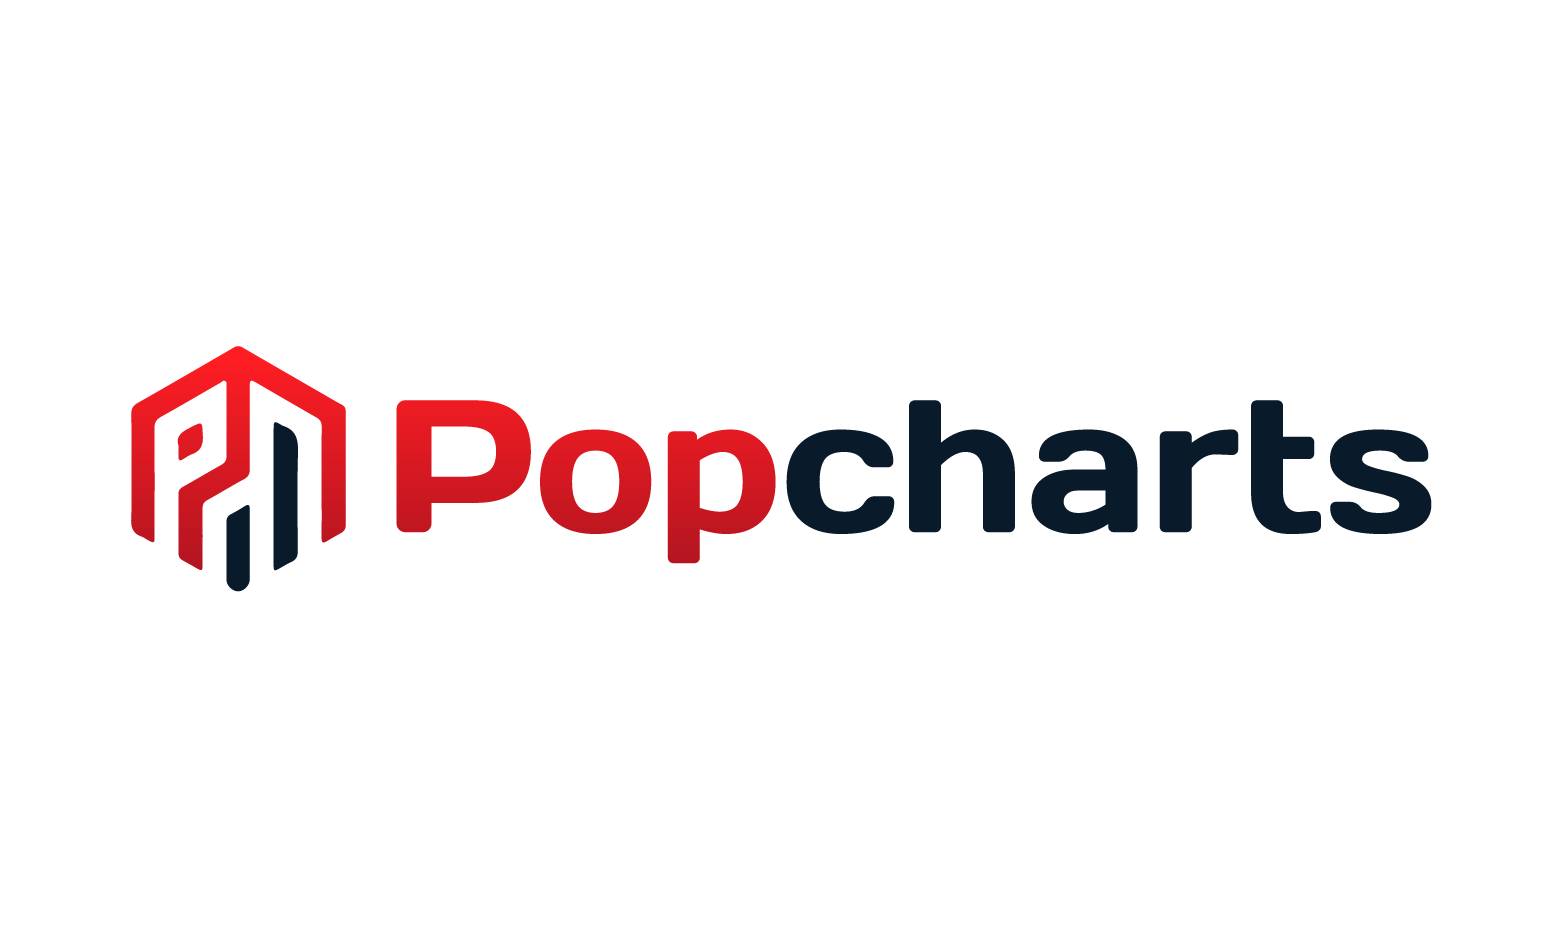 PopCharts.com - Creative brandable domain for sale